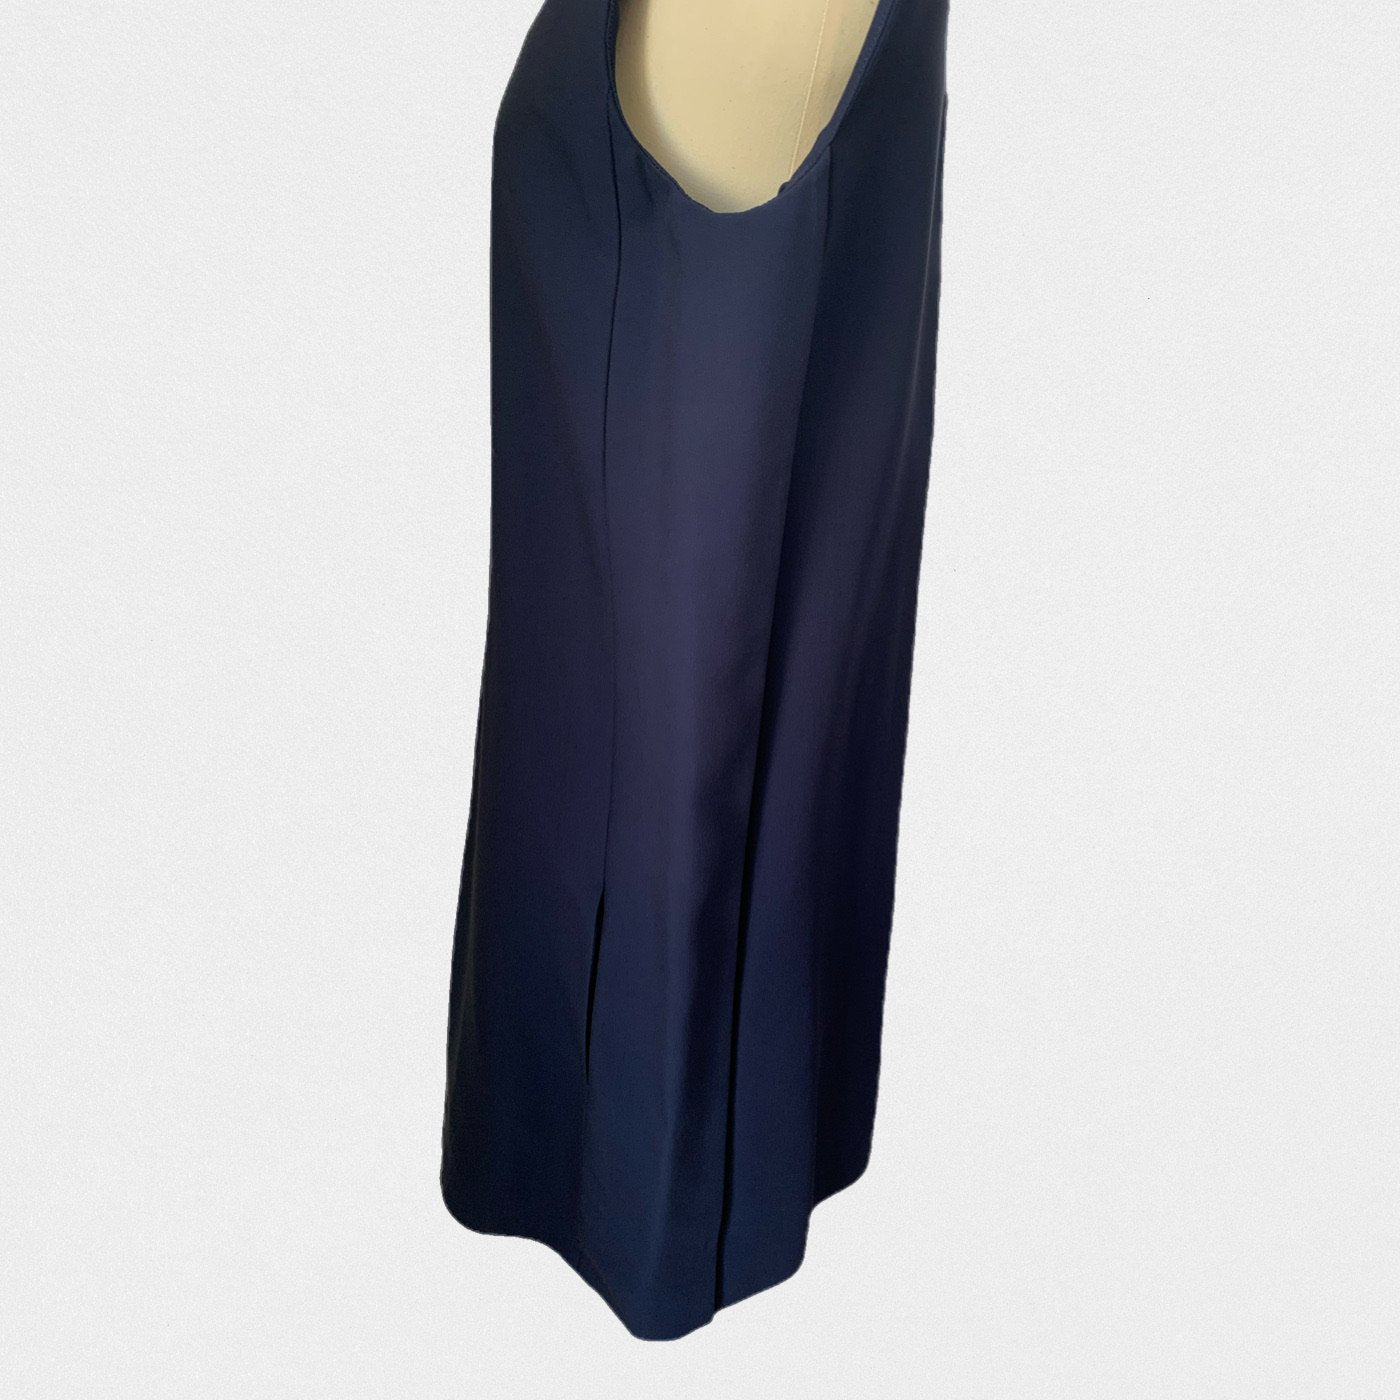 Lysis vintage Celine navy dress - L - 2010s